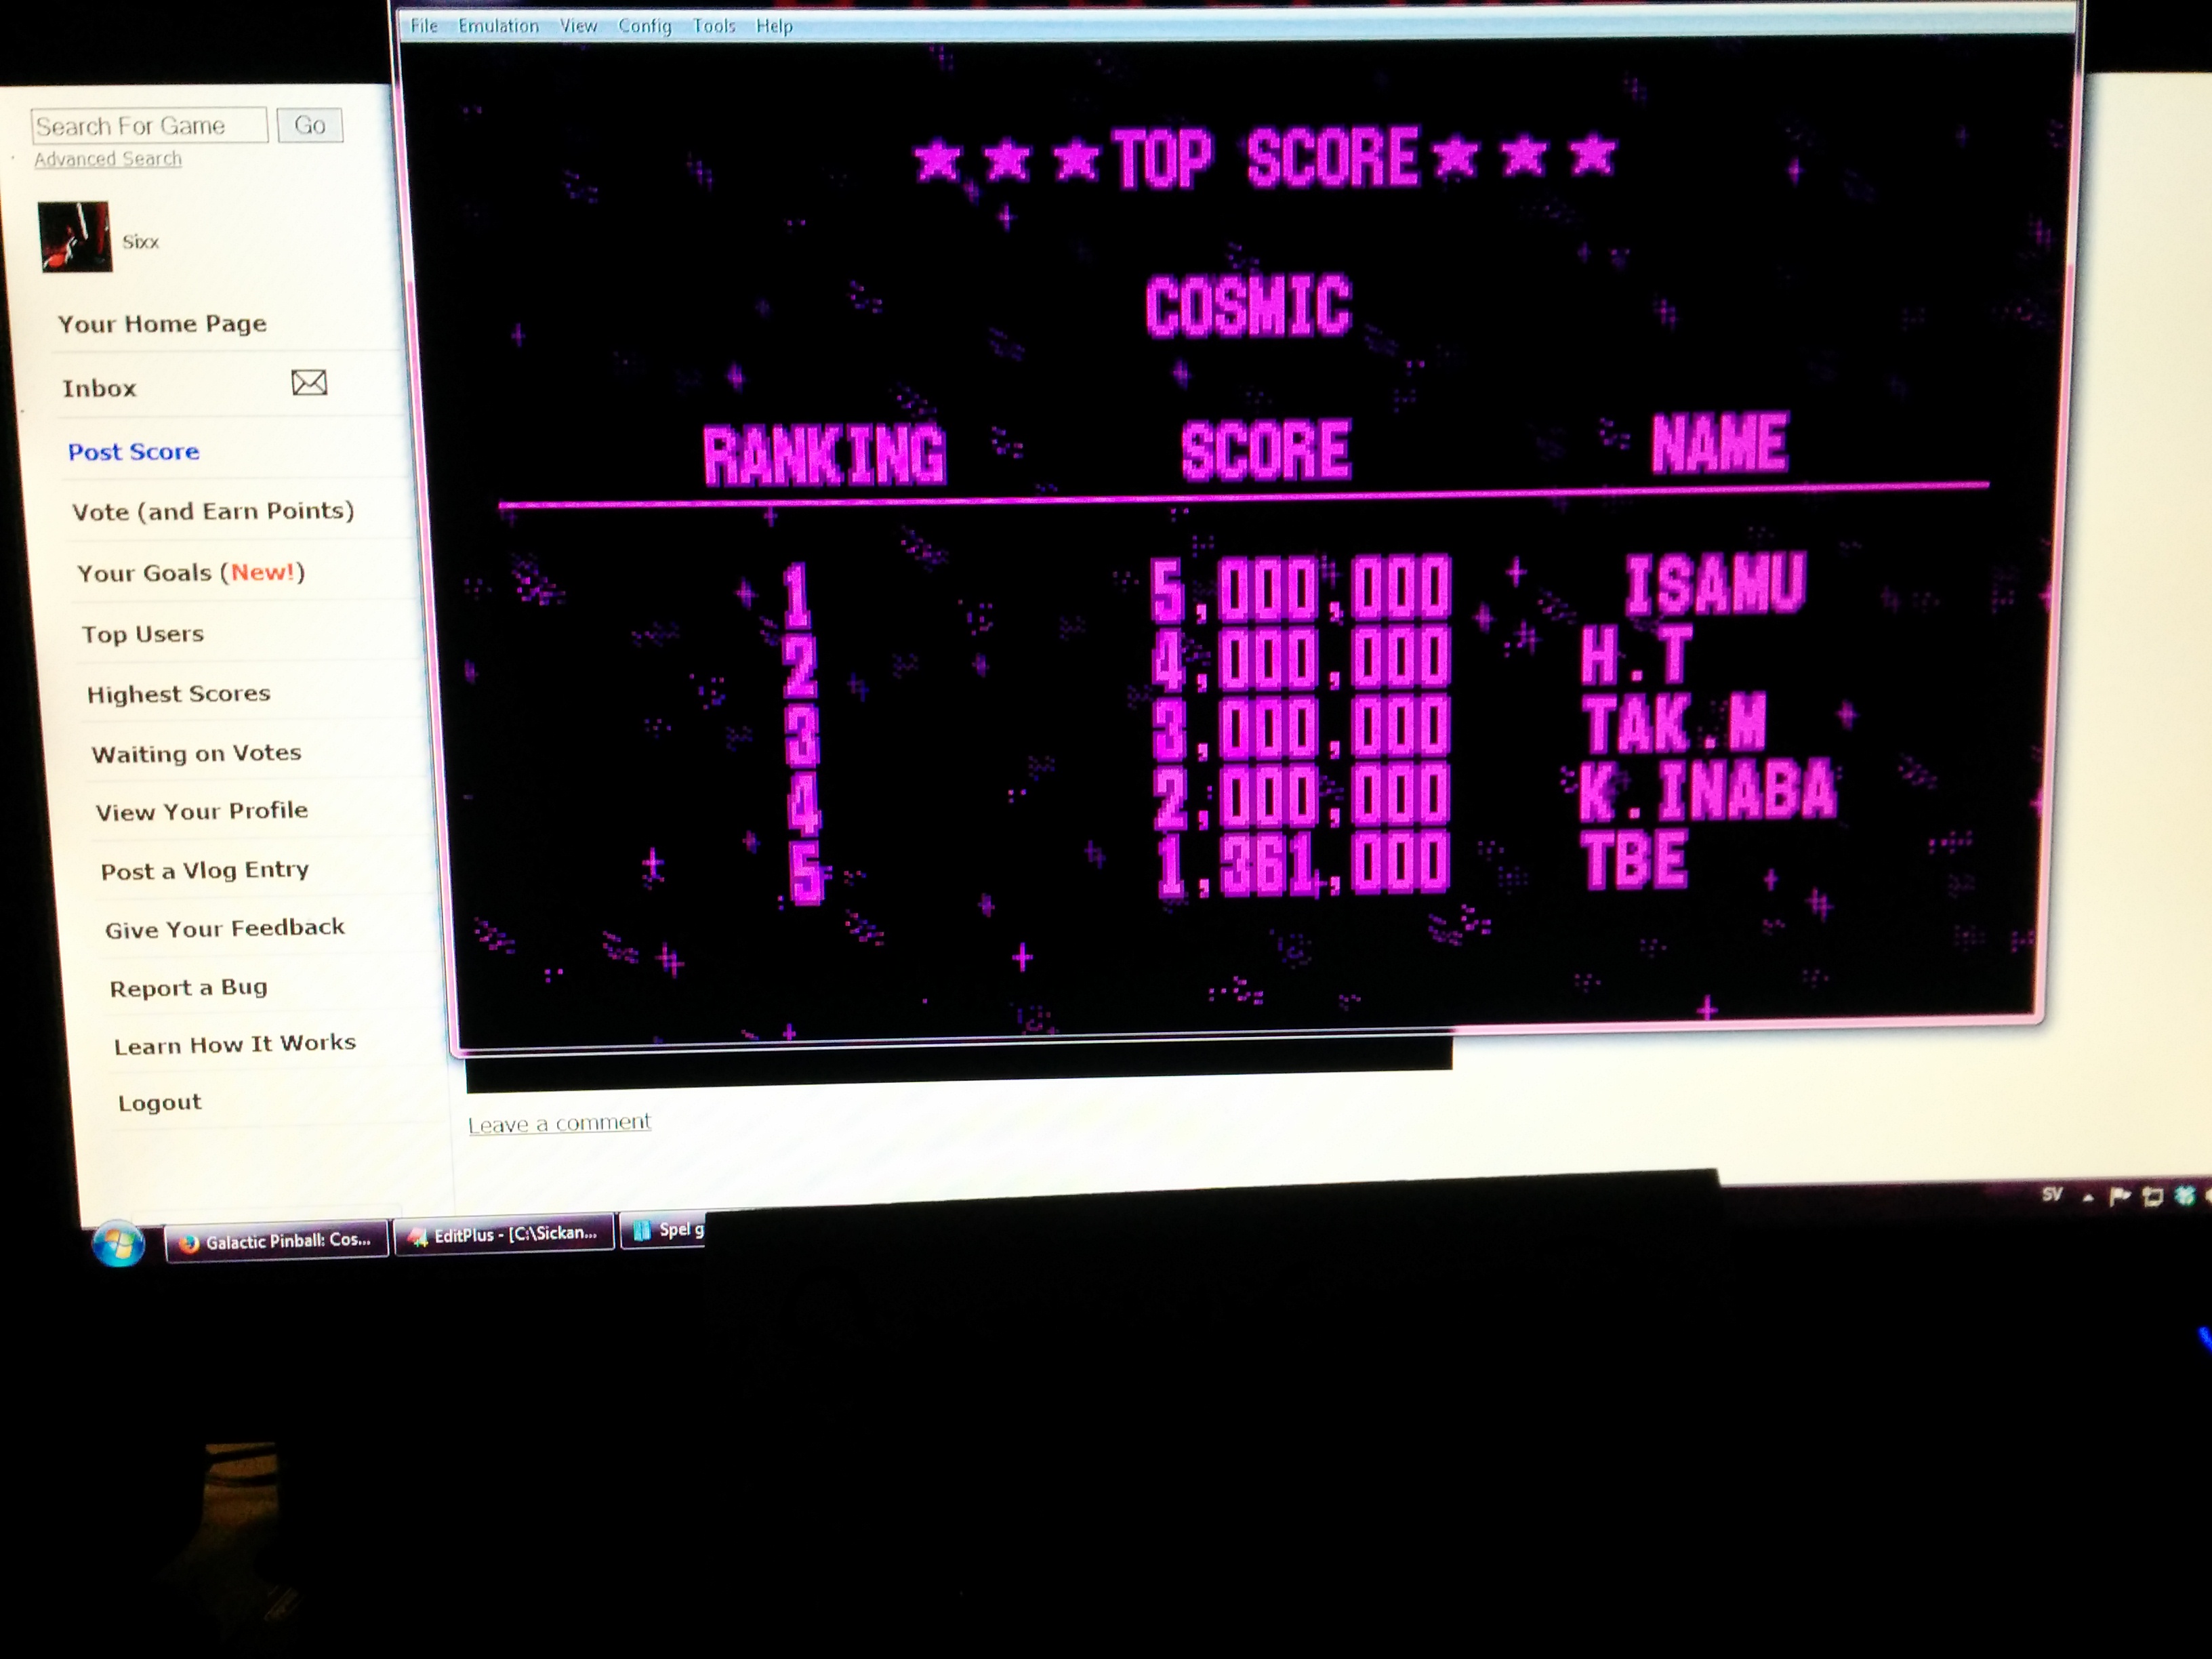 Sixx: Galactic Pinball: Cosmic (Virtual Boy Emulated) 1,361,000 points on 2014-05-04 11:35:52